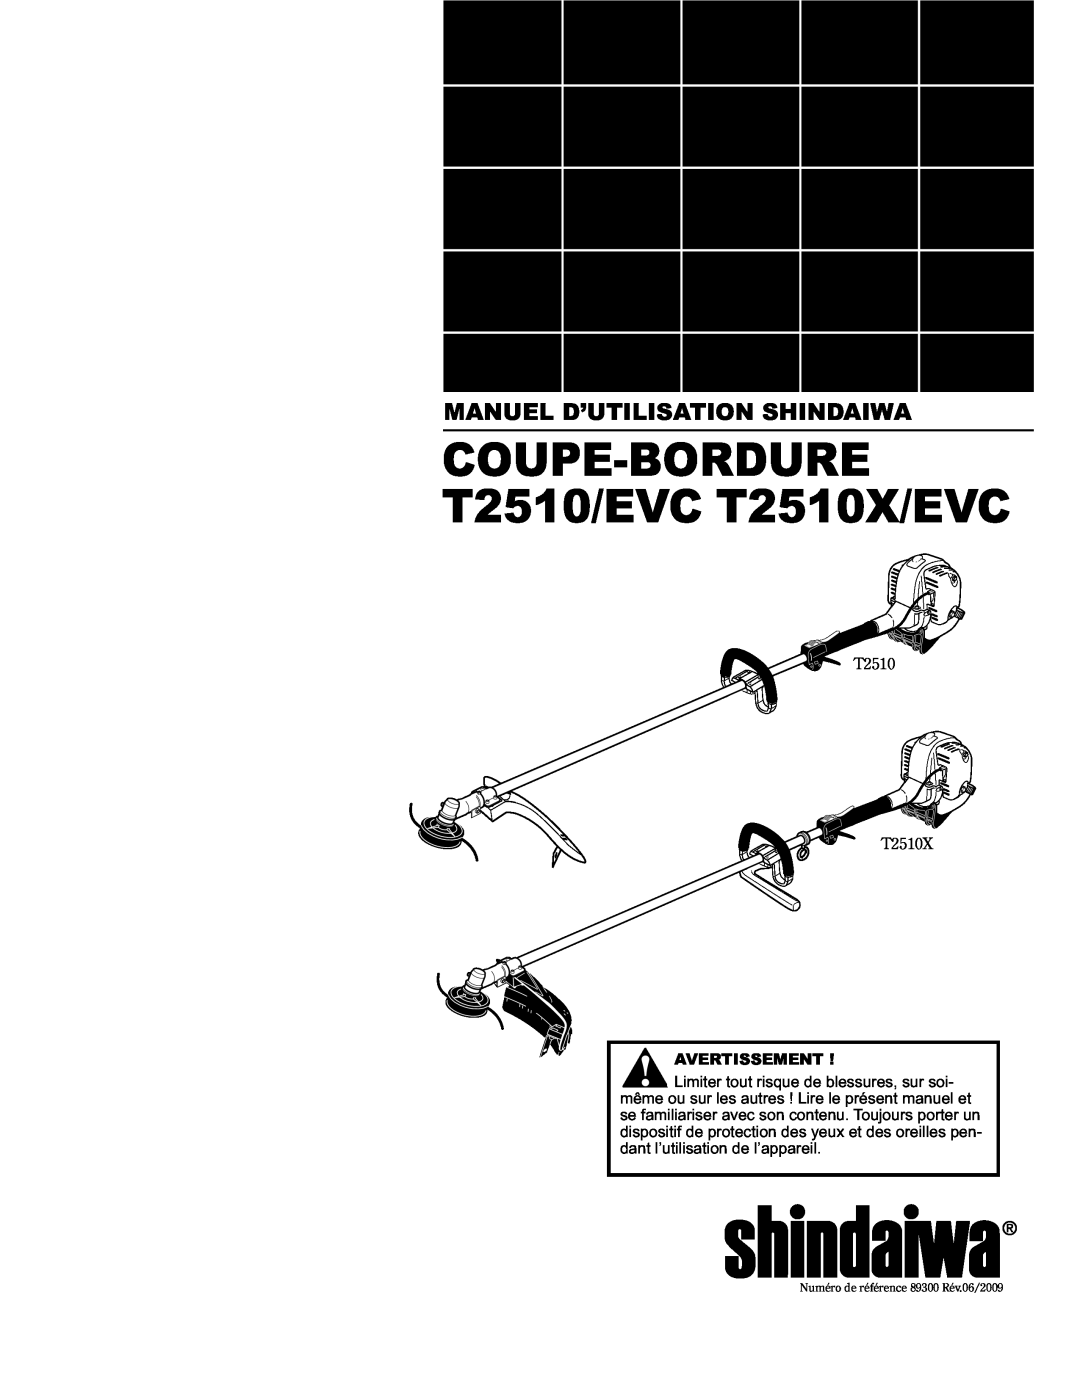 Shindaiwa 89300 manual COUPE-BORDURET2510/EVC T2510X/EVC, Manuel D’Utilisation Shindaiwa, Avertissement 